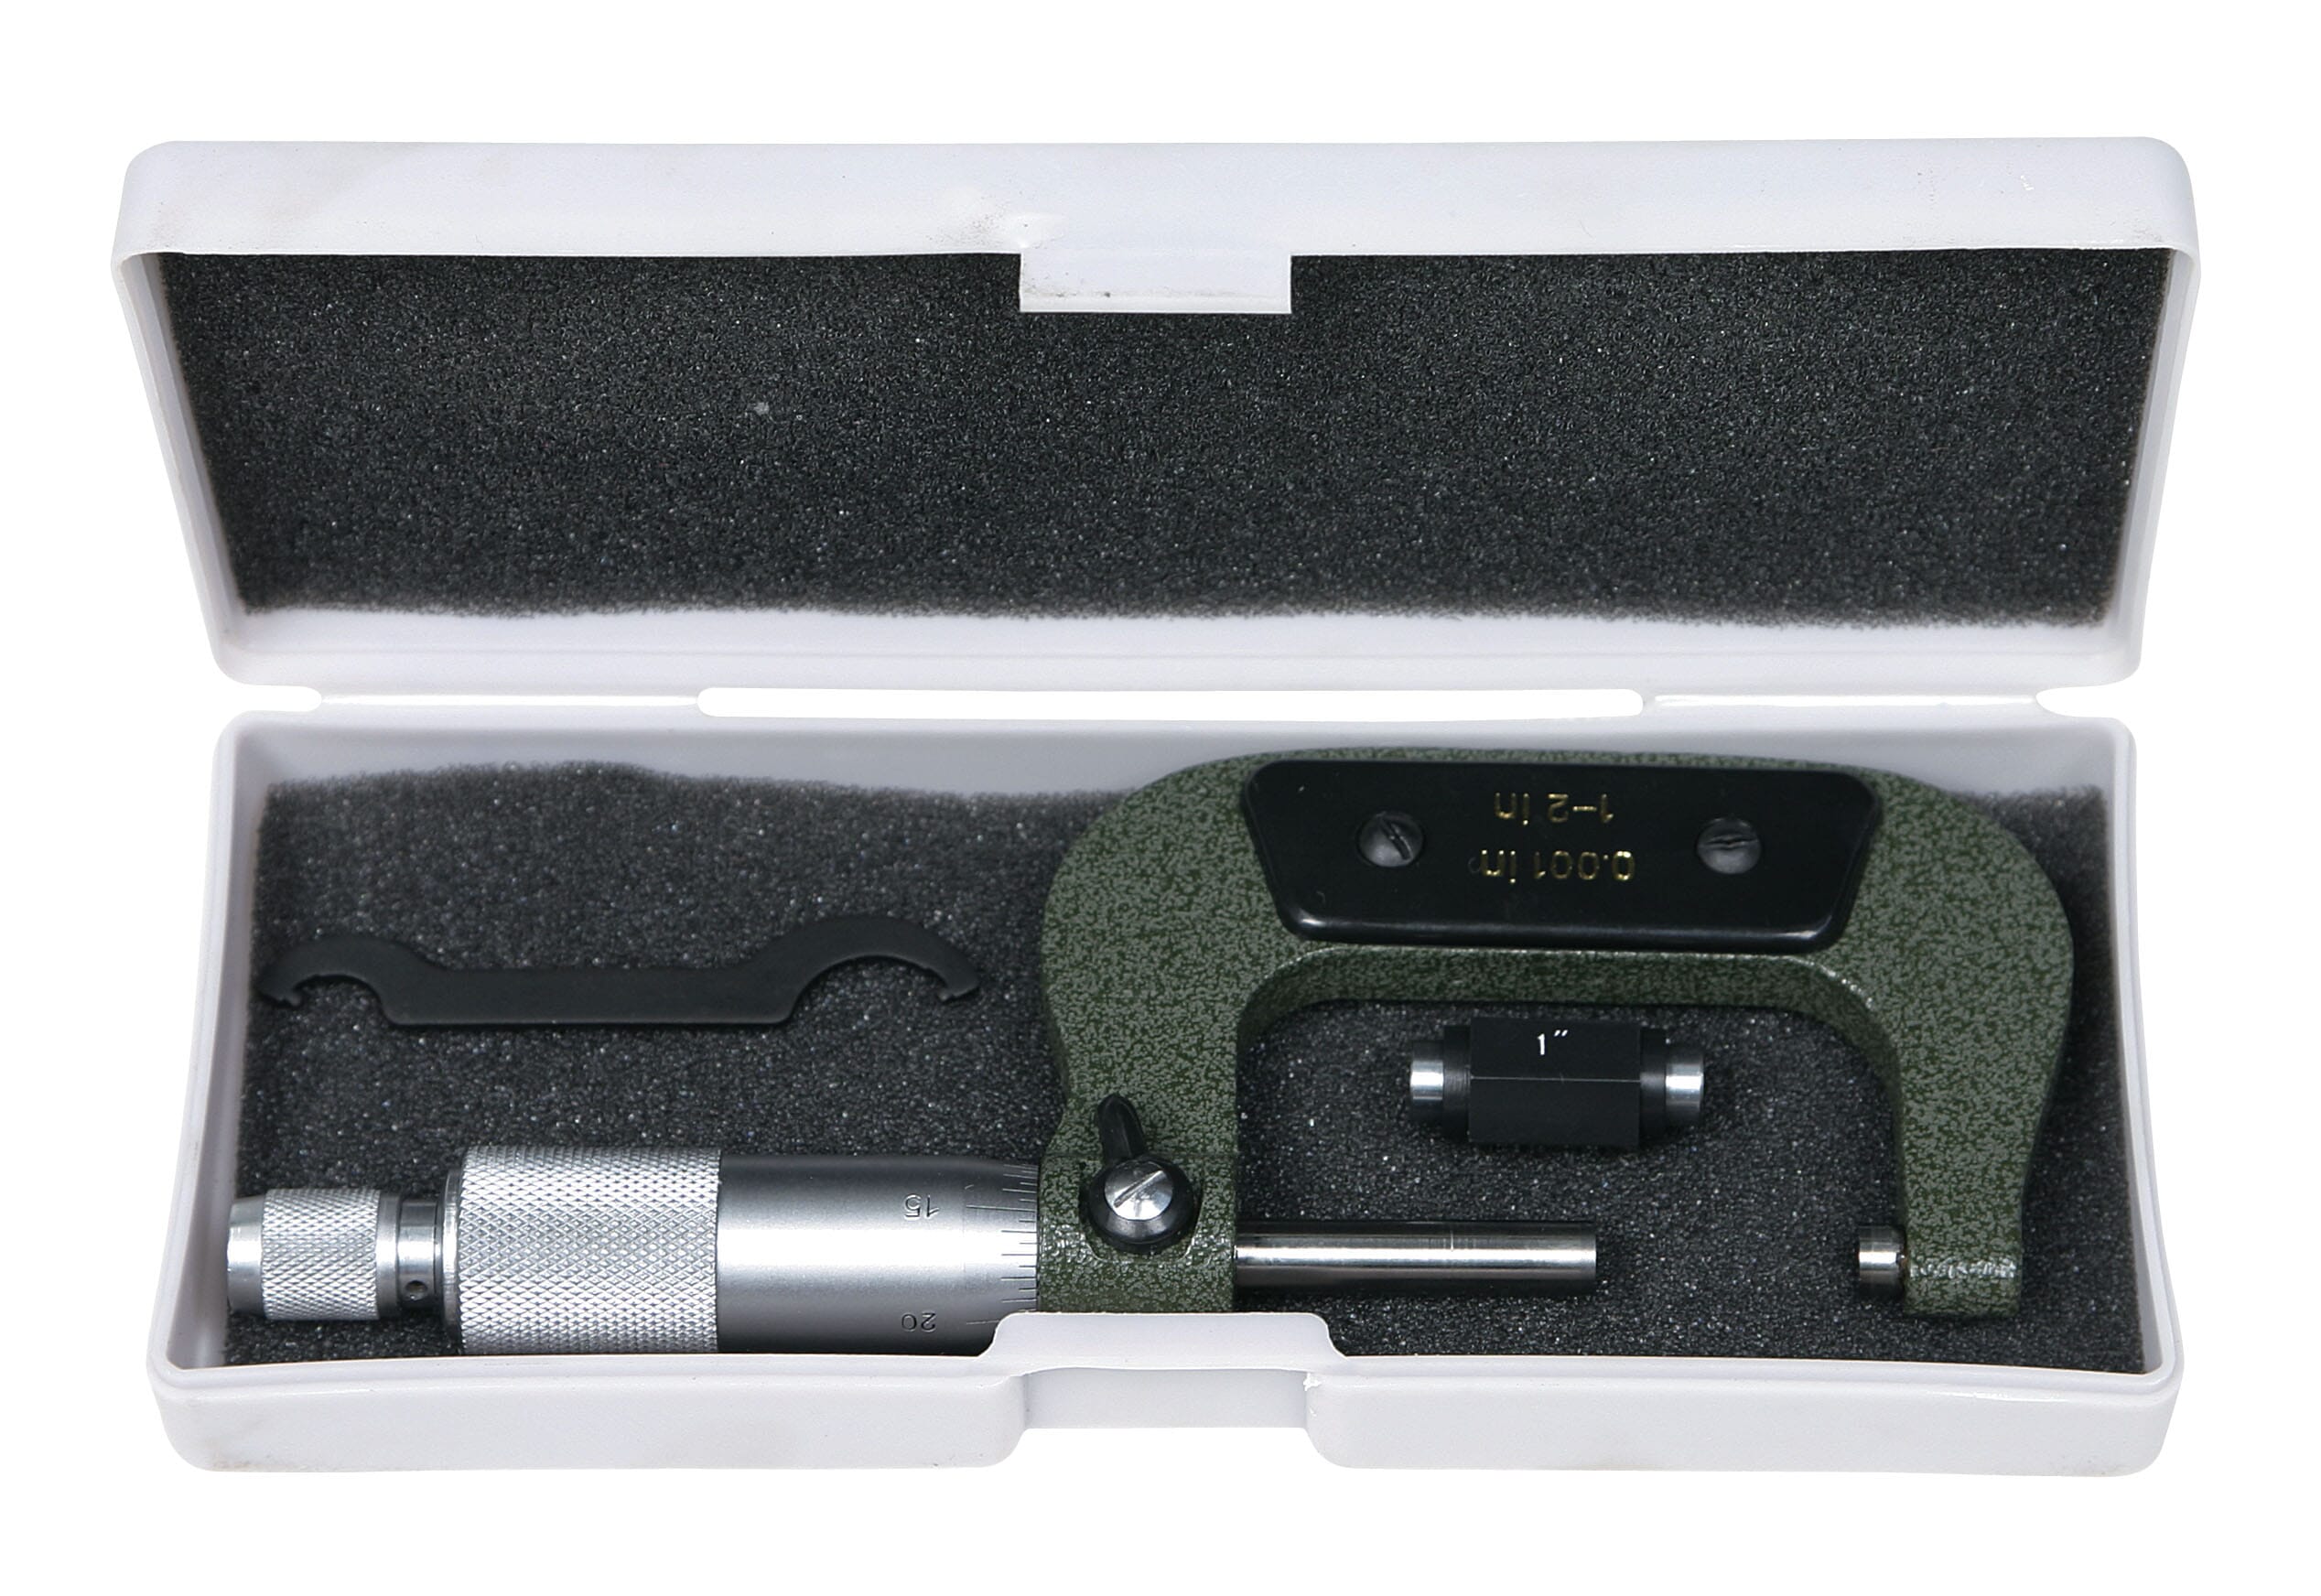 Wayco Micrometer Imperial 1-2"